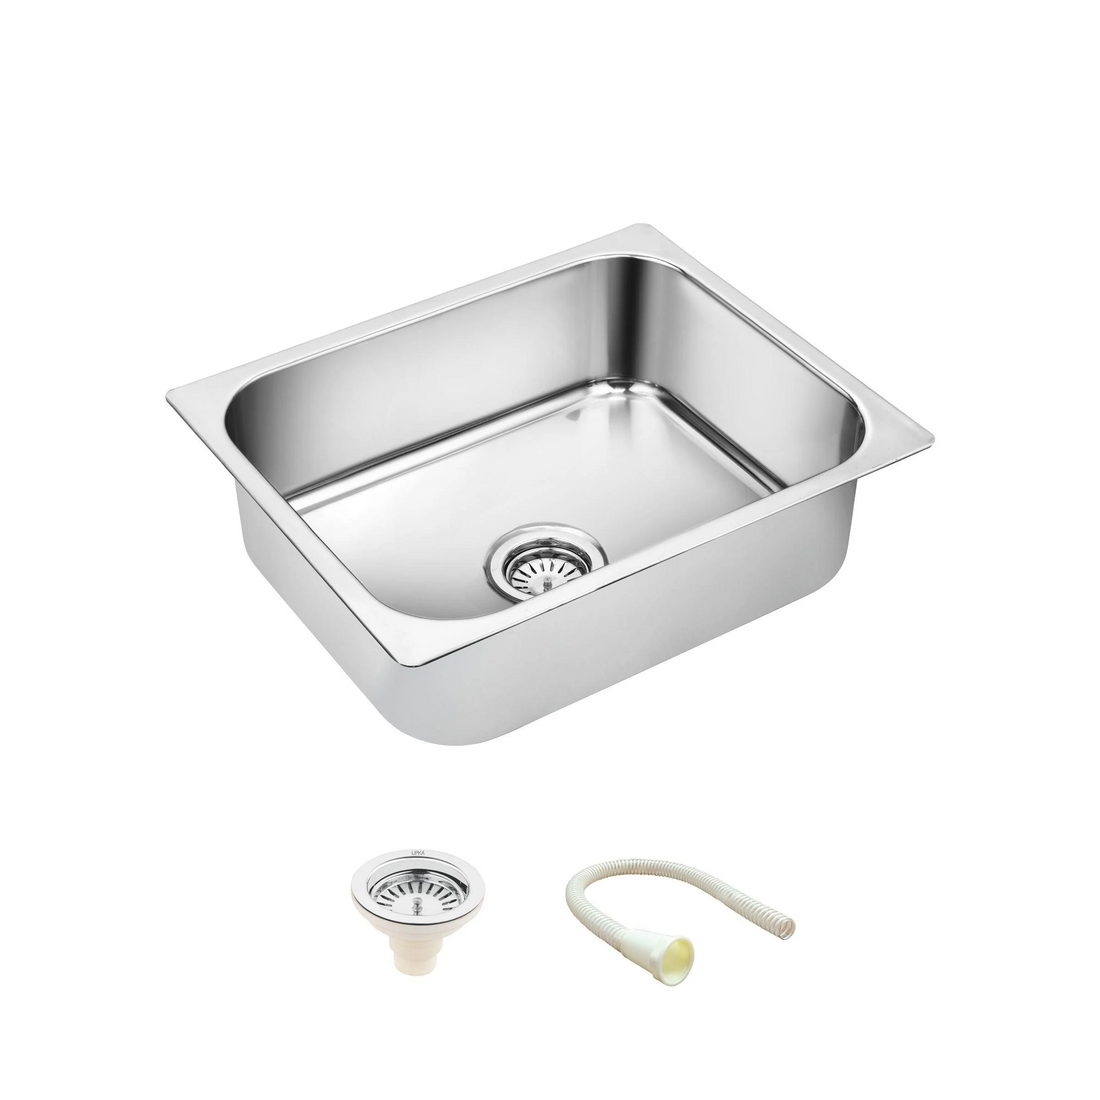 Square Single Bowl 304-Grade Kitchen Sink (24 x 18 x 9 Inches)